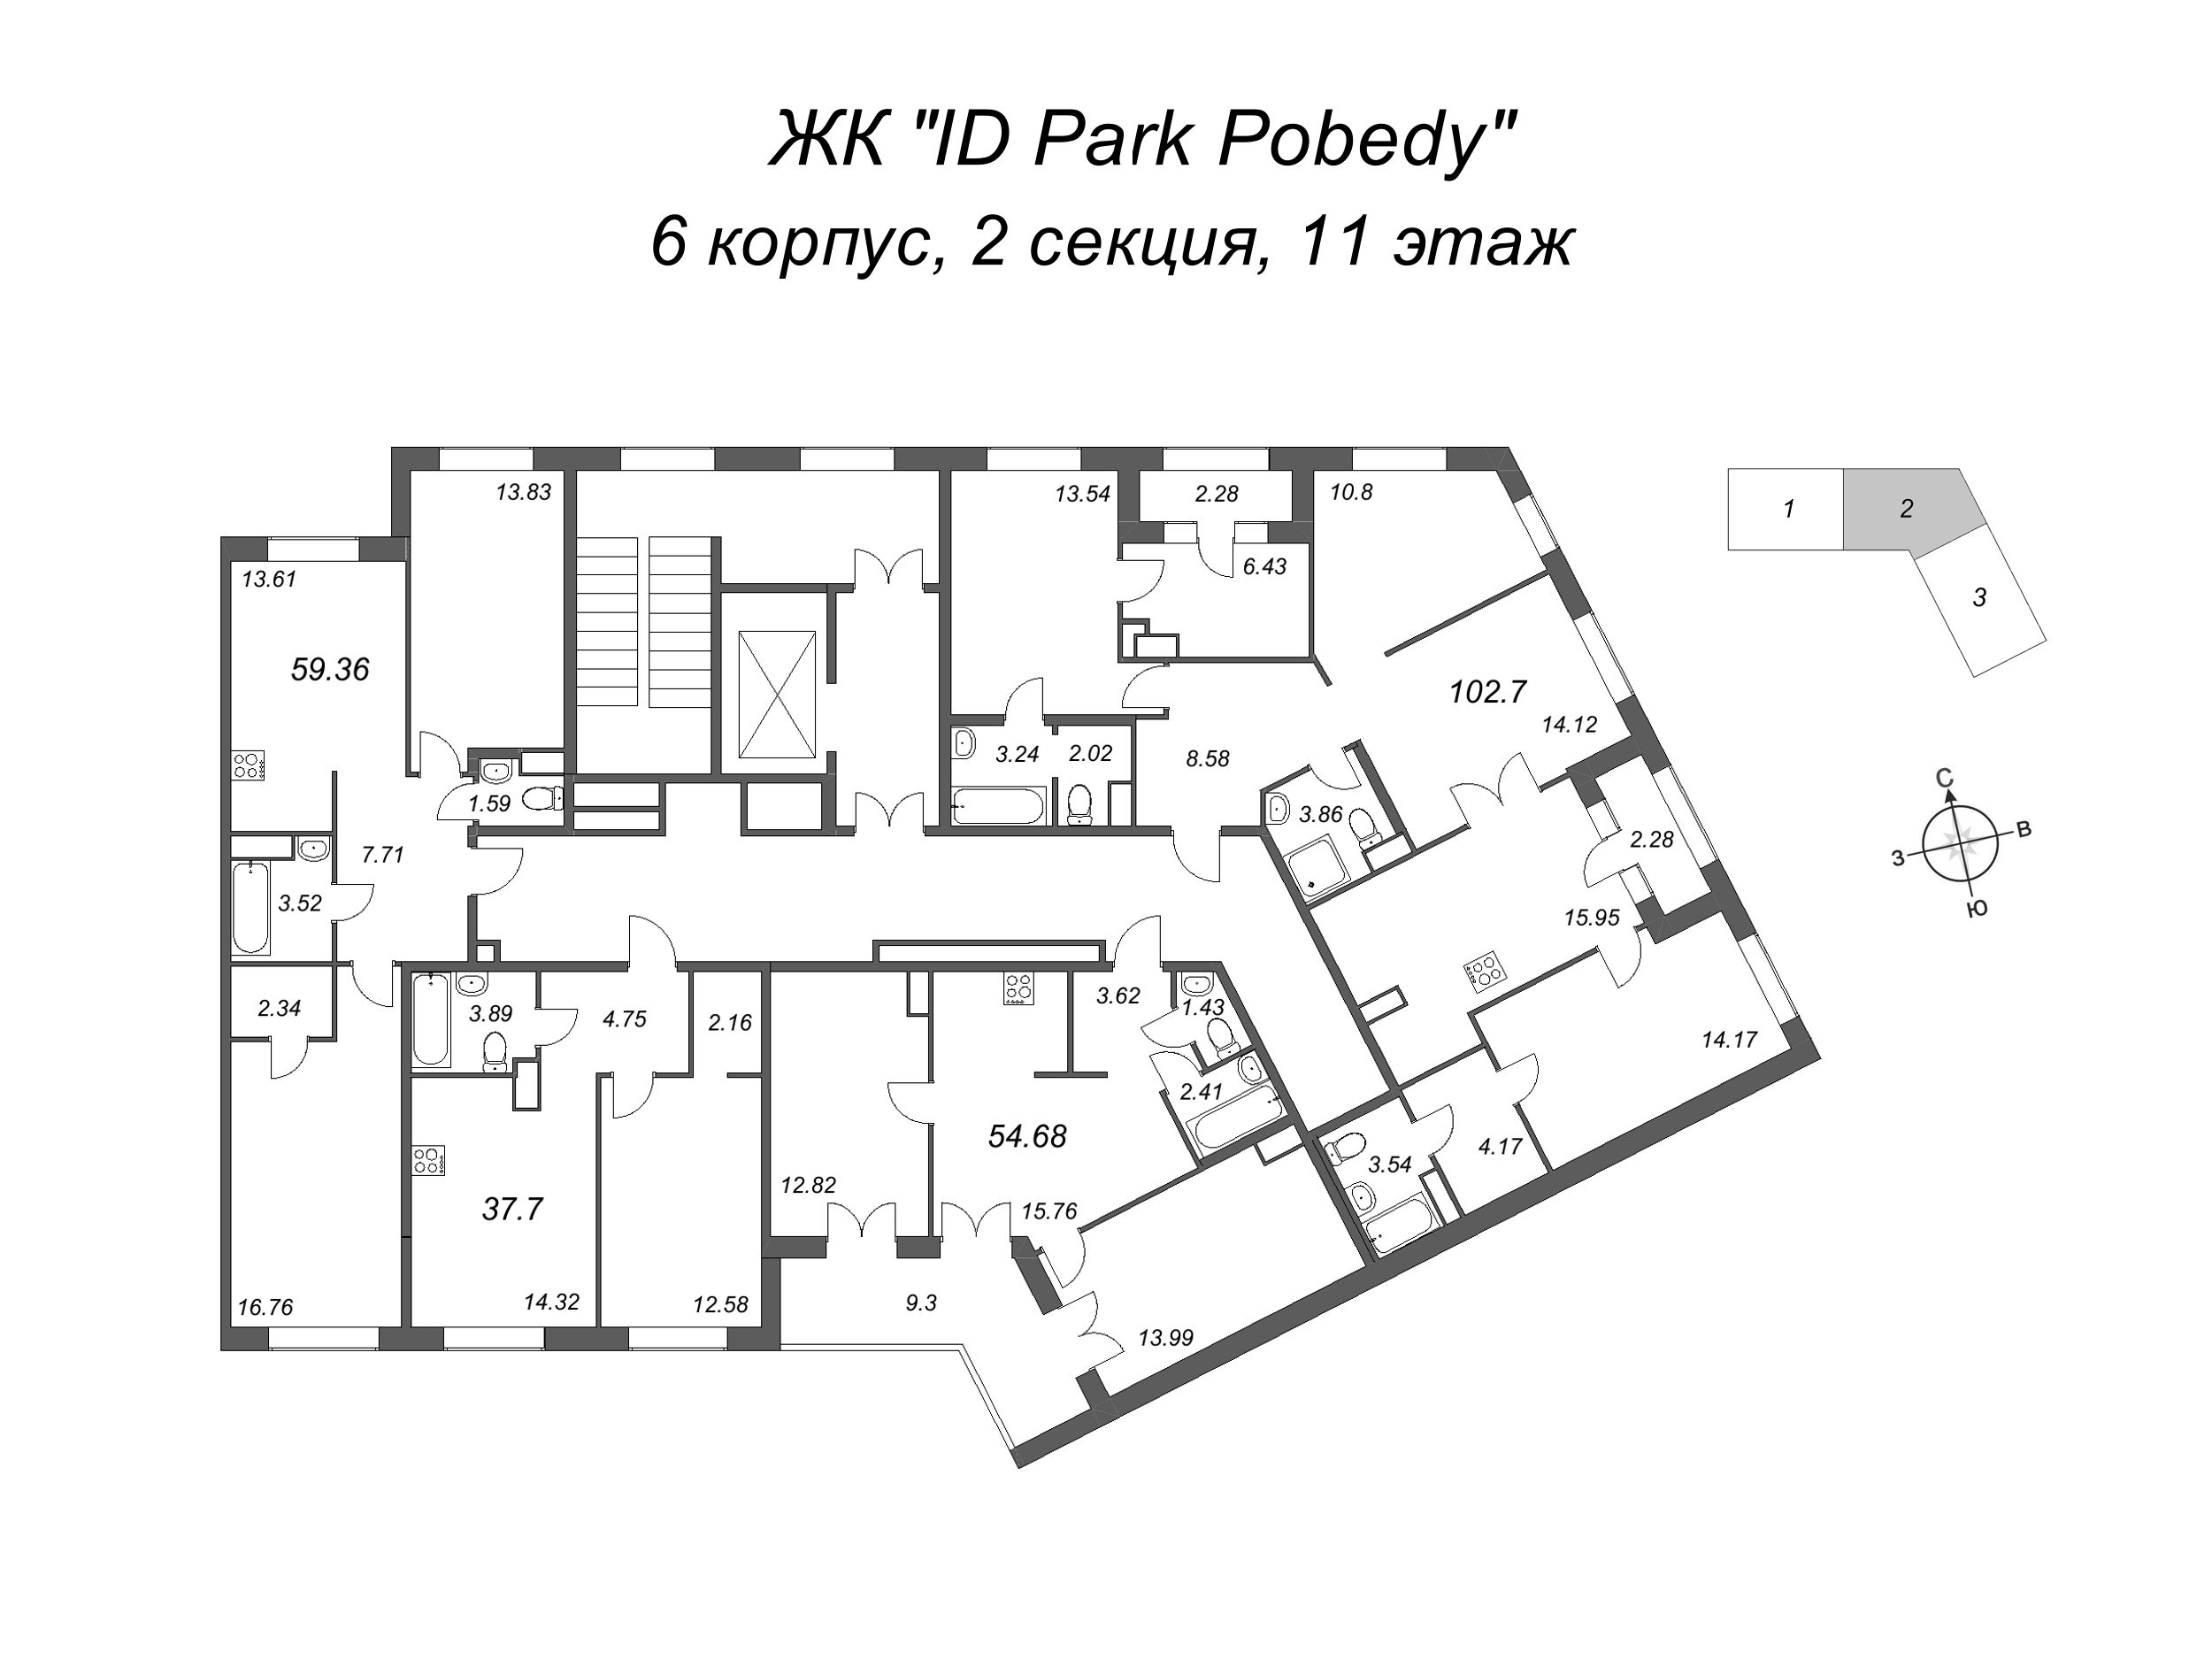 5-комнатная (Евро) квартира, 102.7 м² в ЖК "ID Park Pobedy" - планировка этажа